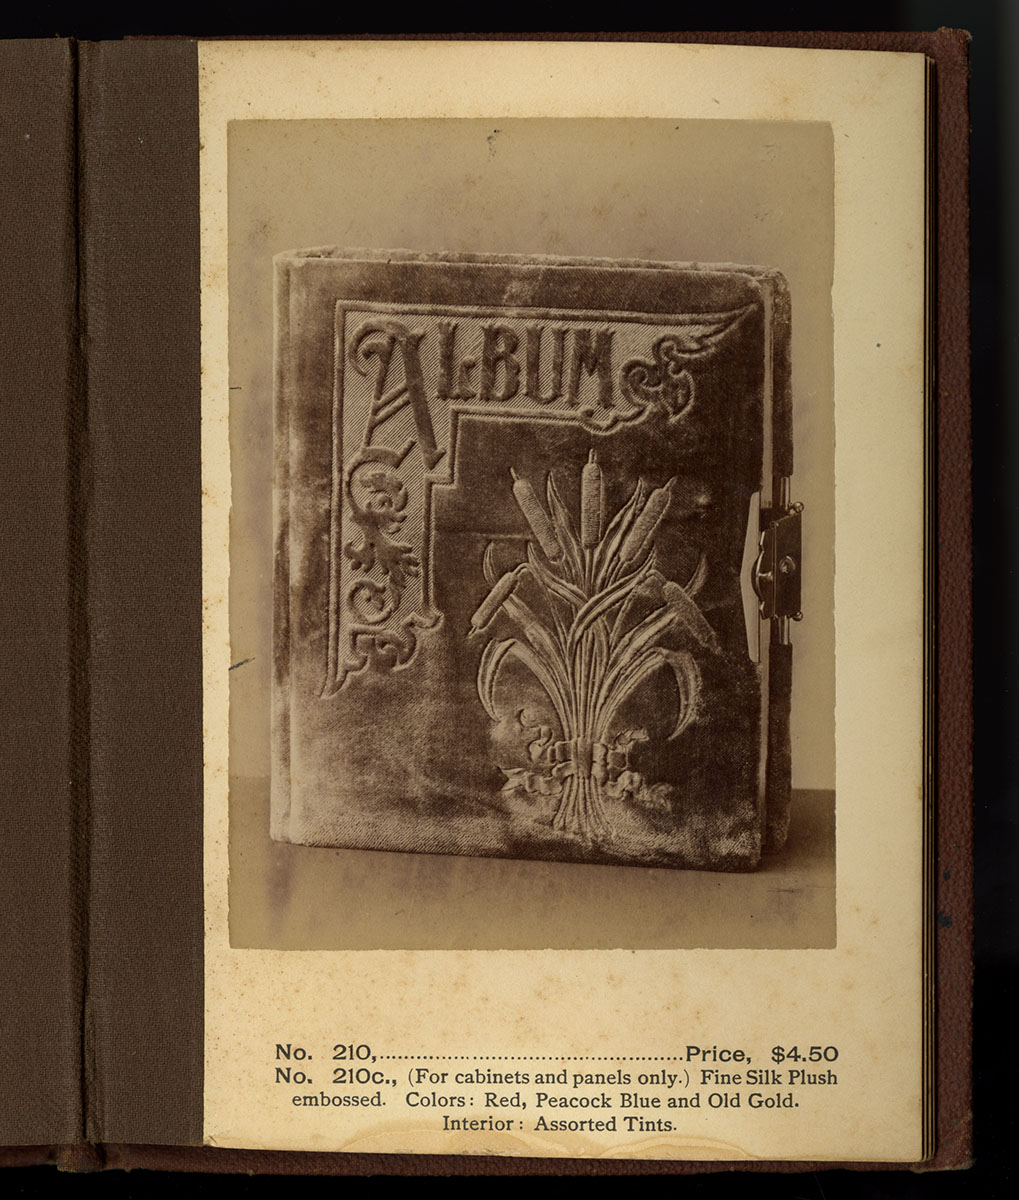 John C. Winston & Co. Photographic Bible Prospectus (Philadelphia, ca. 1904). Michael Zinman Binding Collection.